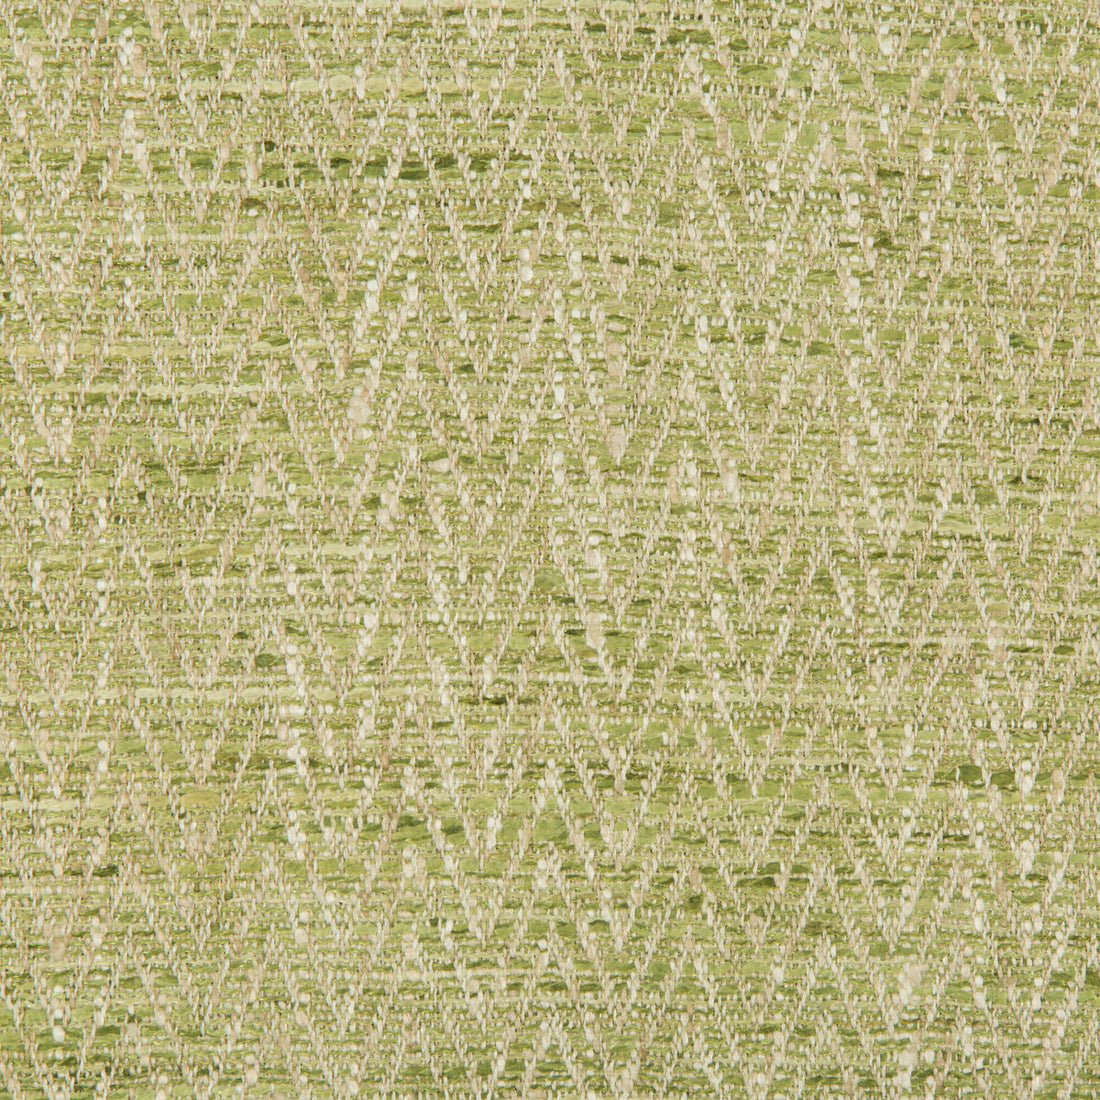 Kravet Smart fabric in 34092-13 color - pattern 34092.13.0 - by Kravet Smart